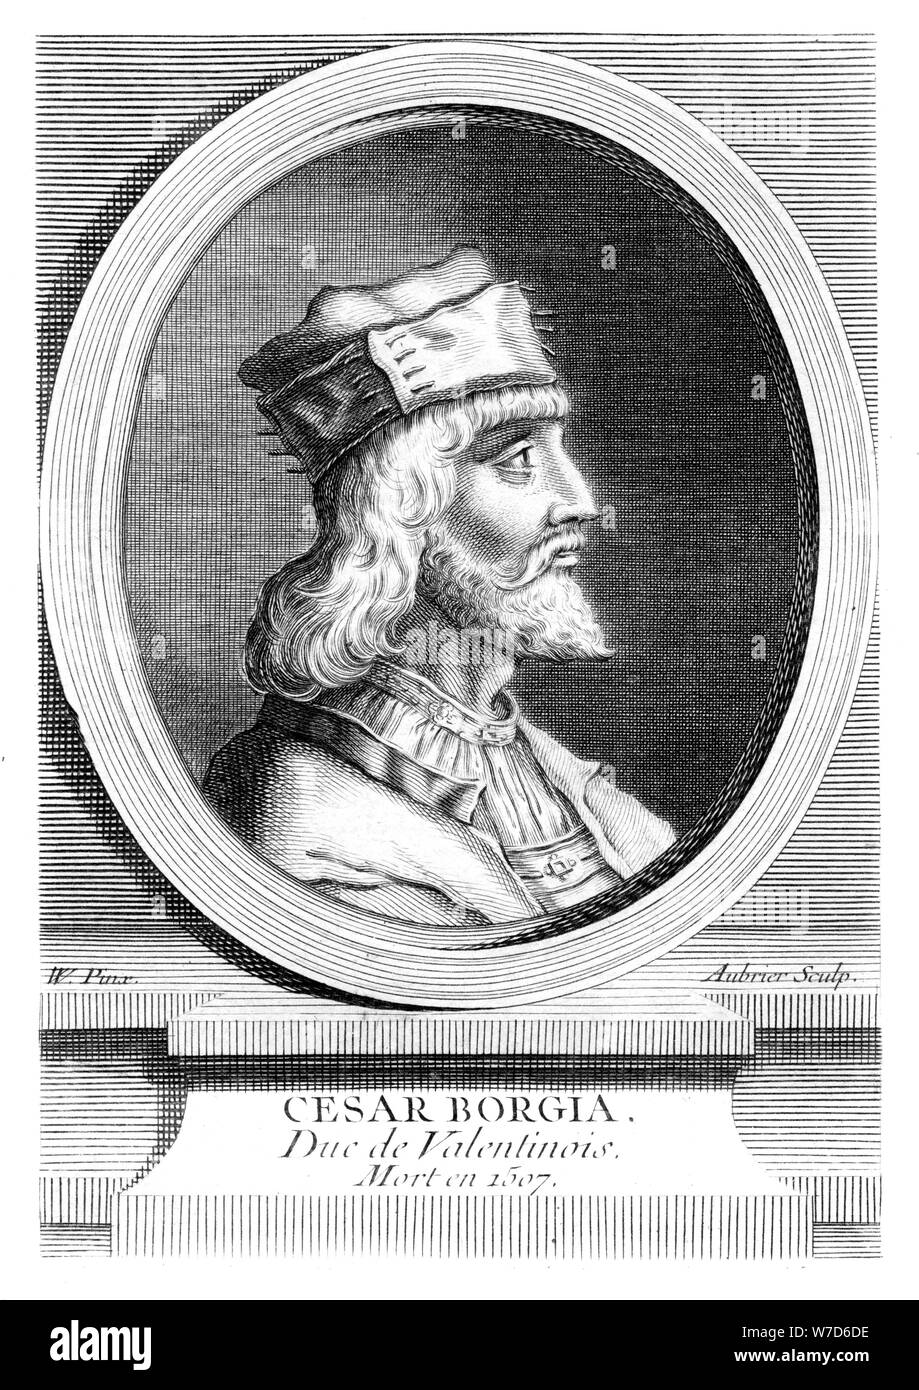 Cesare Borgia, Duke of Valentinois, Italian military leader.Artist: Aubrier Stock Photo